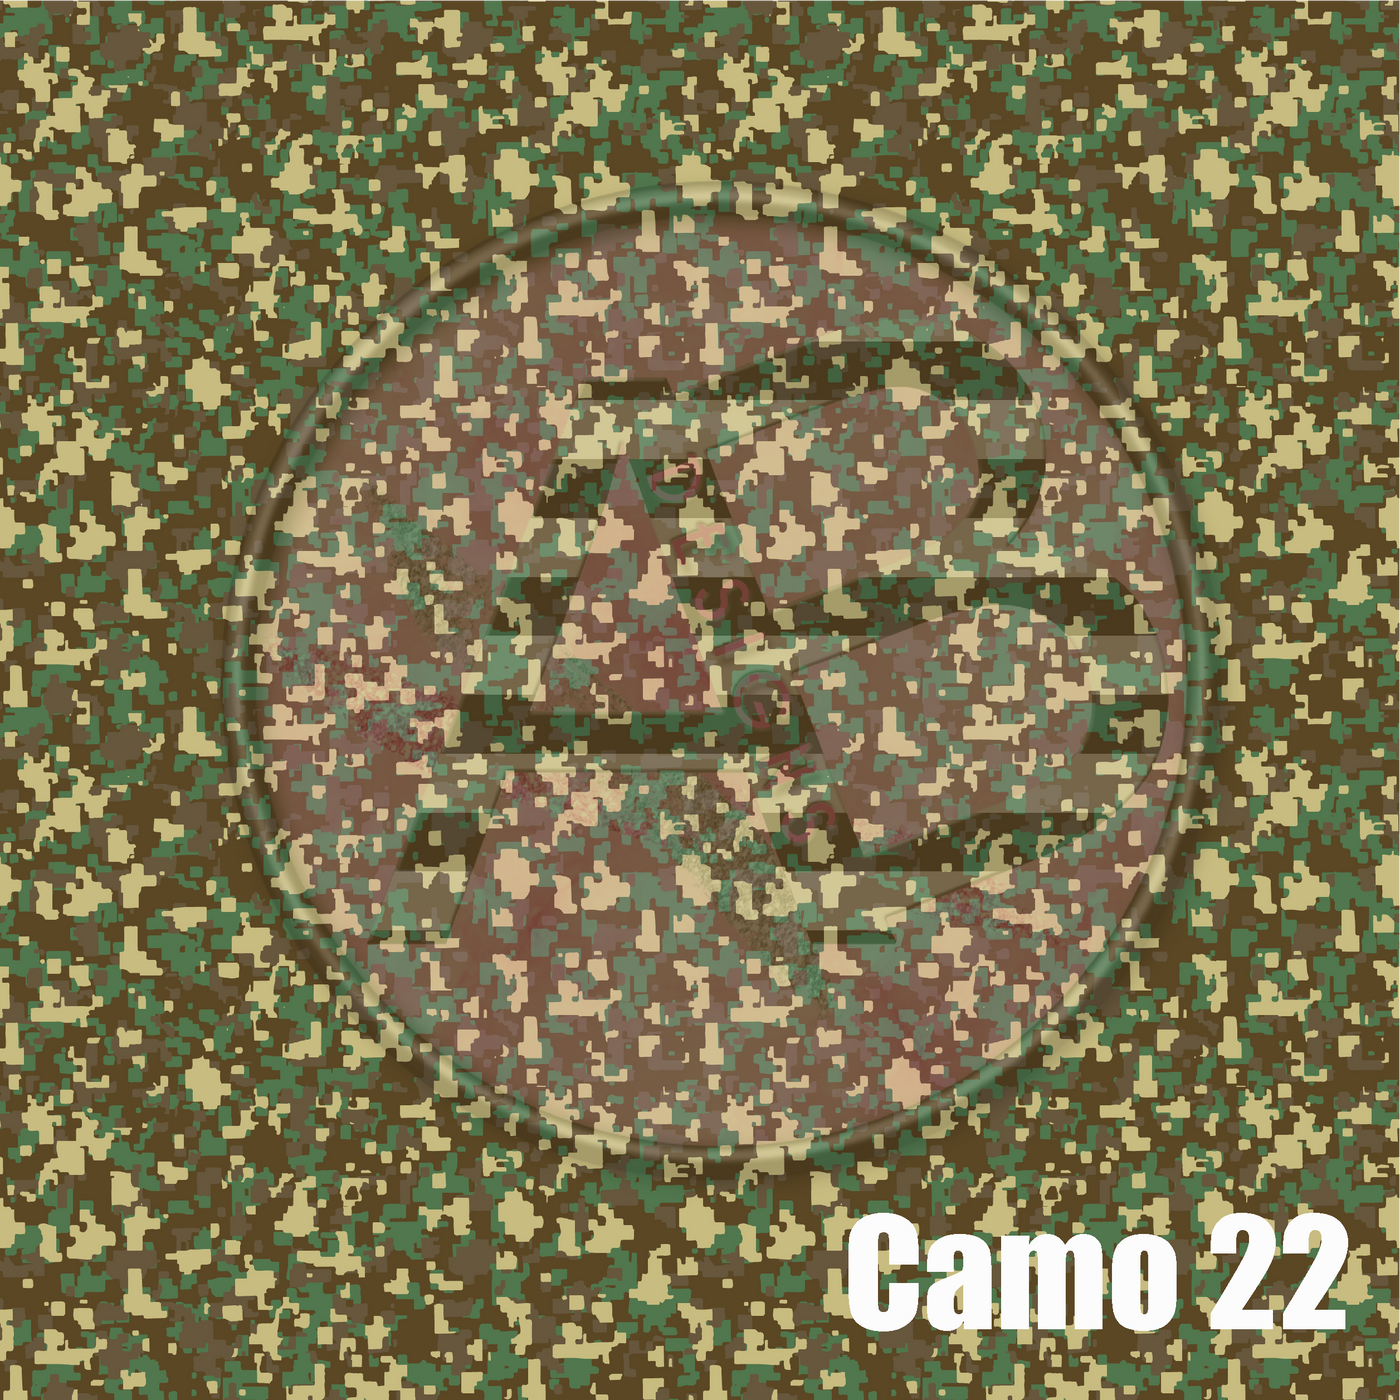 Adhesive Patterned Vinyl - Camo 22